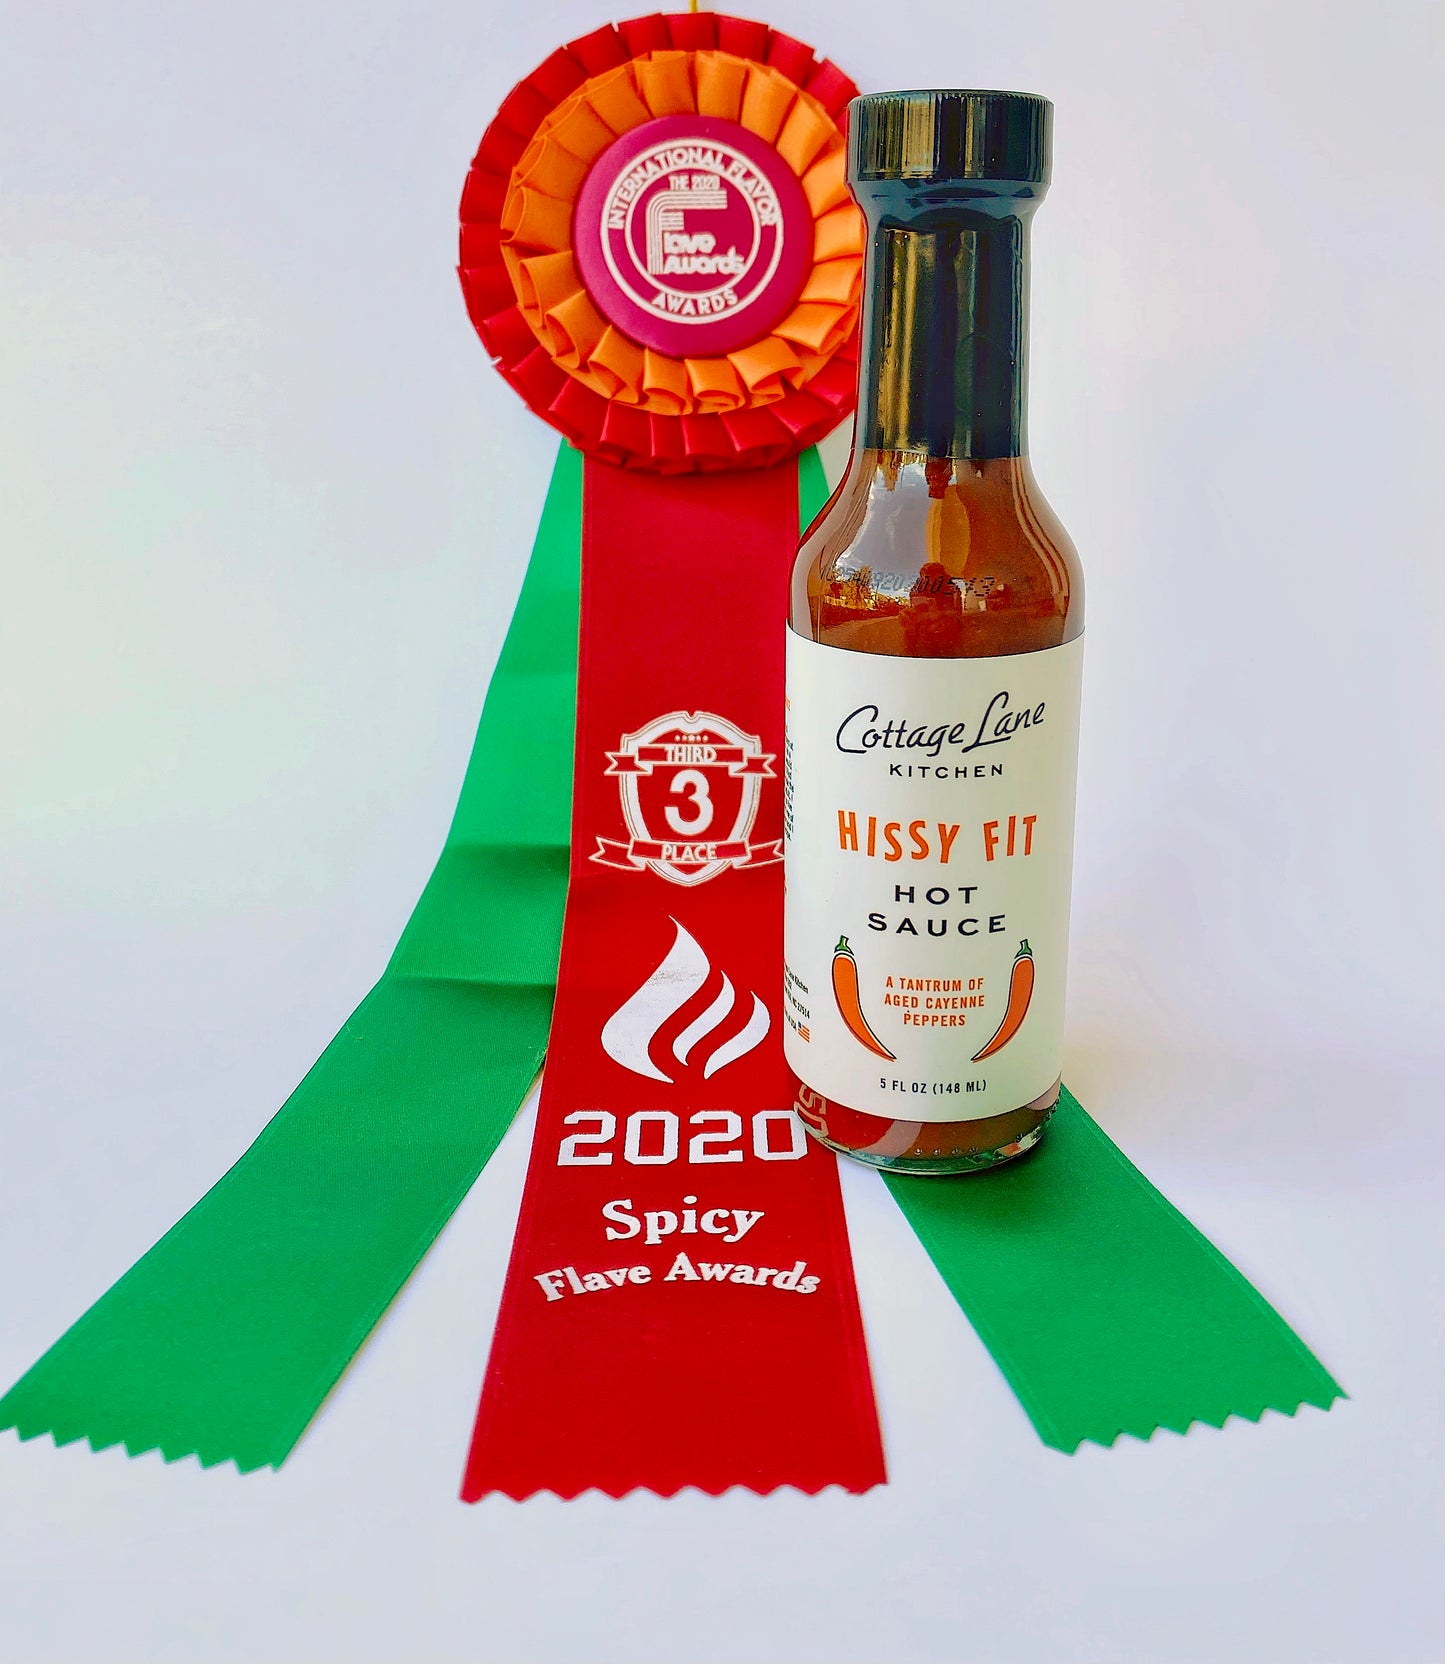 Hissy Fit Hot Sauce wins 2020 International Flav Award